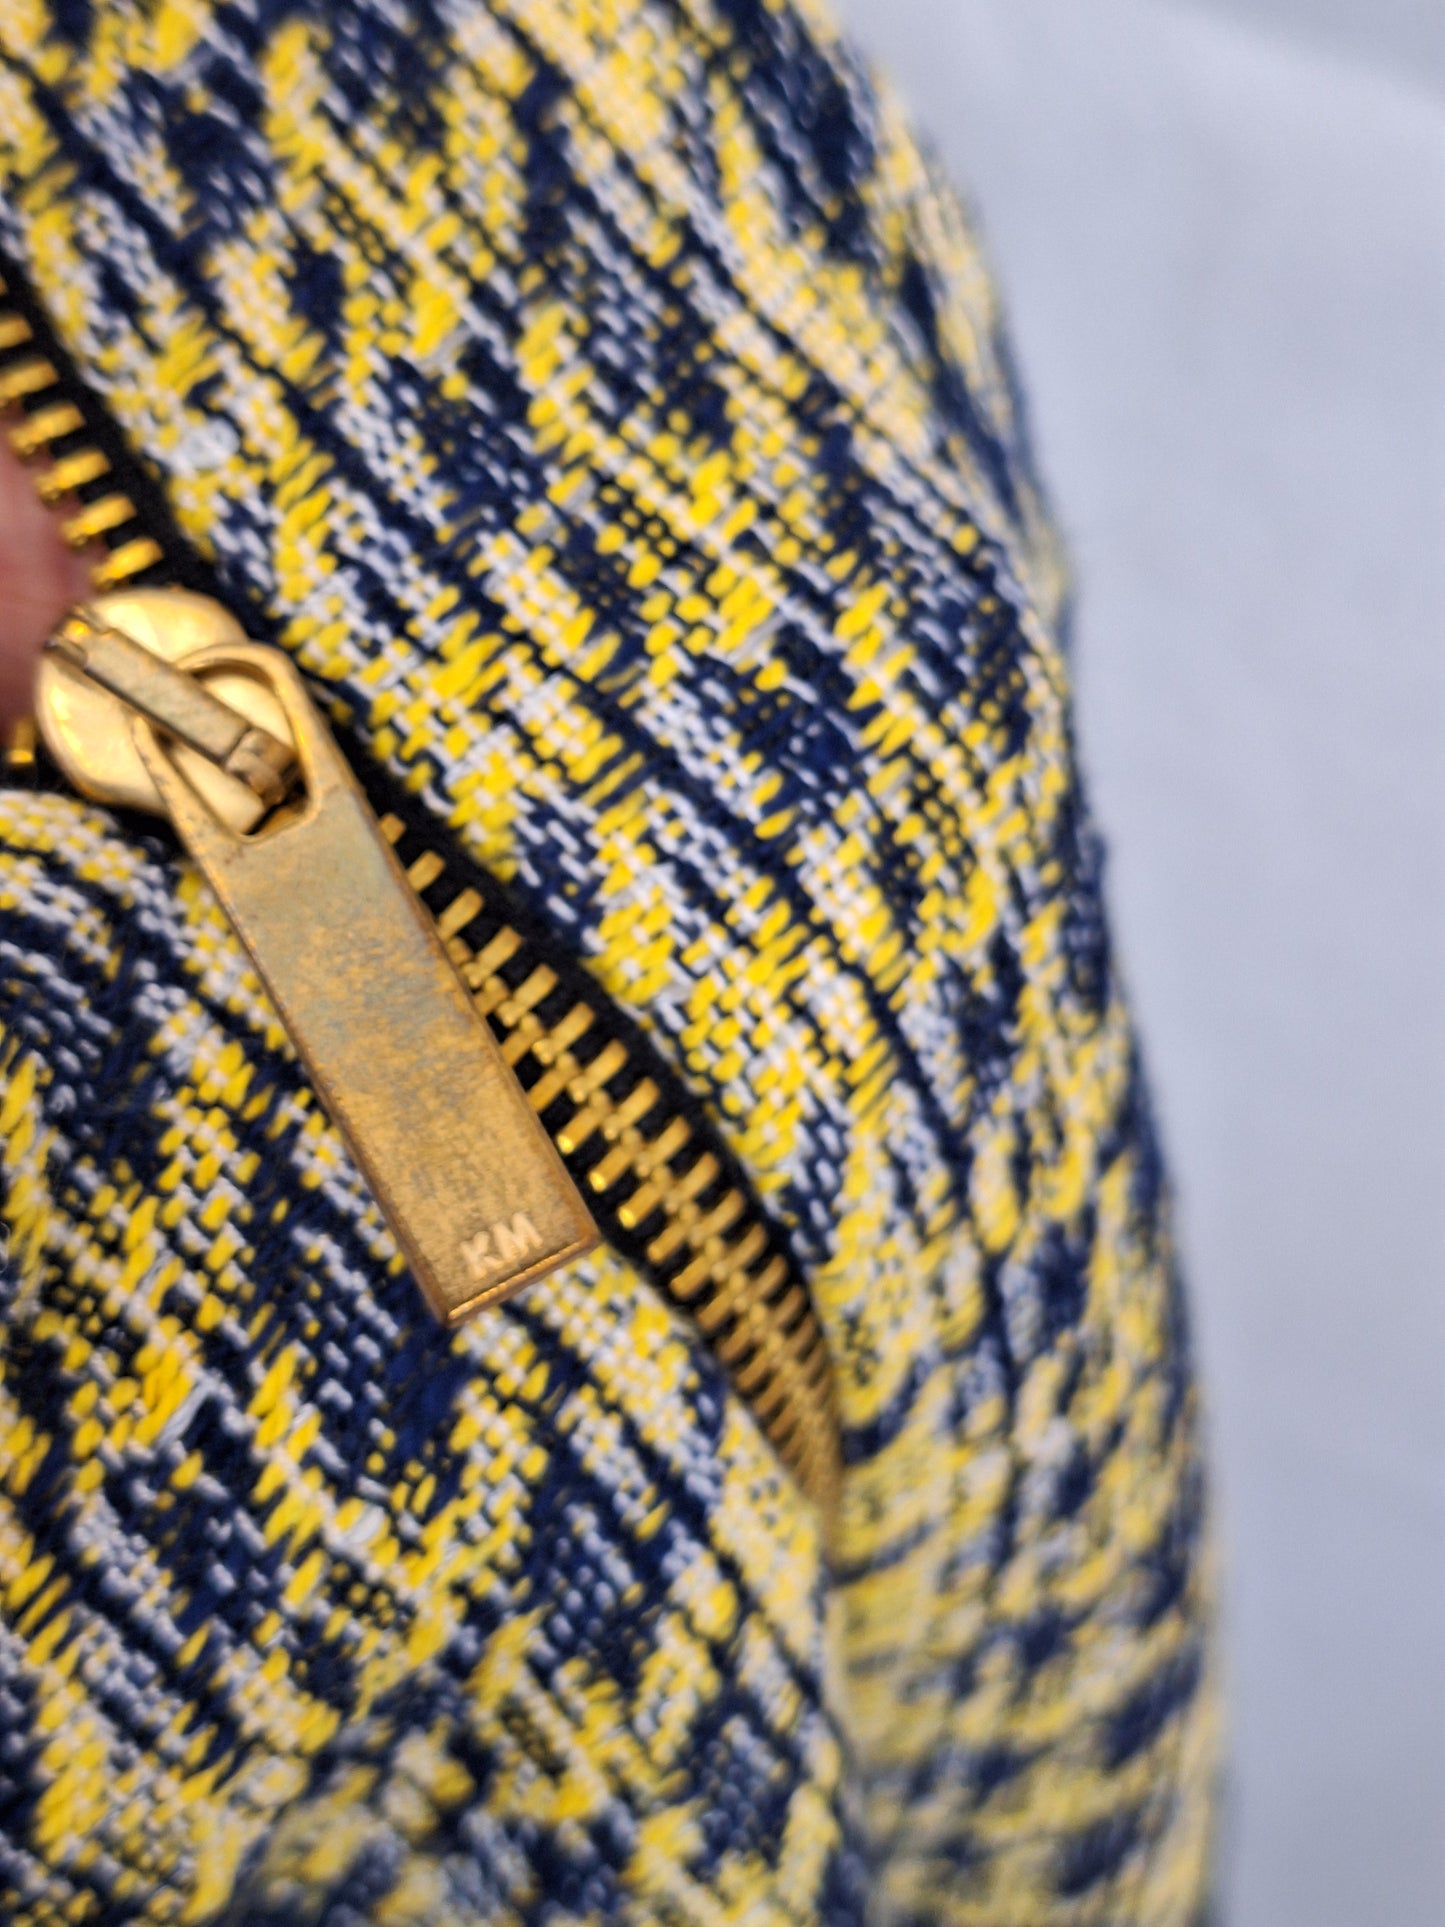 Karen Millen Preppy Tweed Cut Out Midi Dress Size 12 by SwapUp-Online Second Hand Store-Online Thrift Store